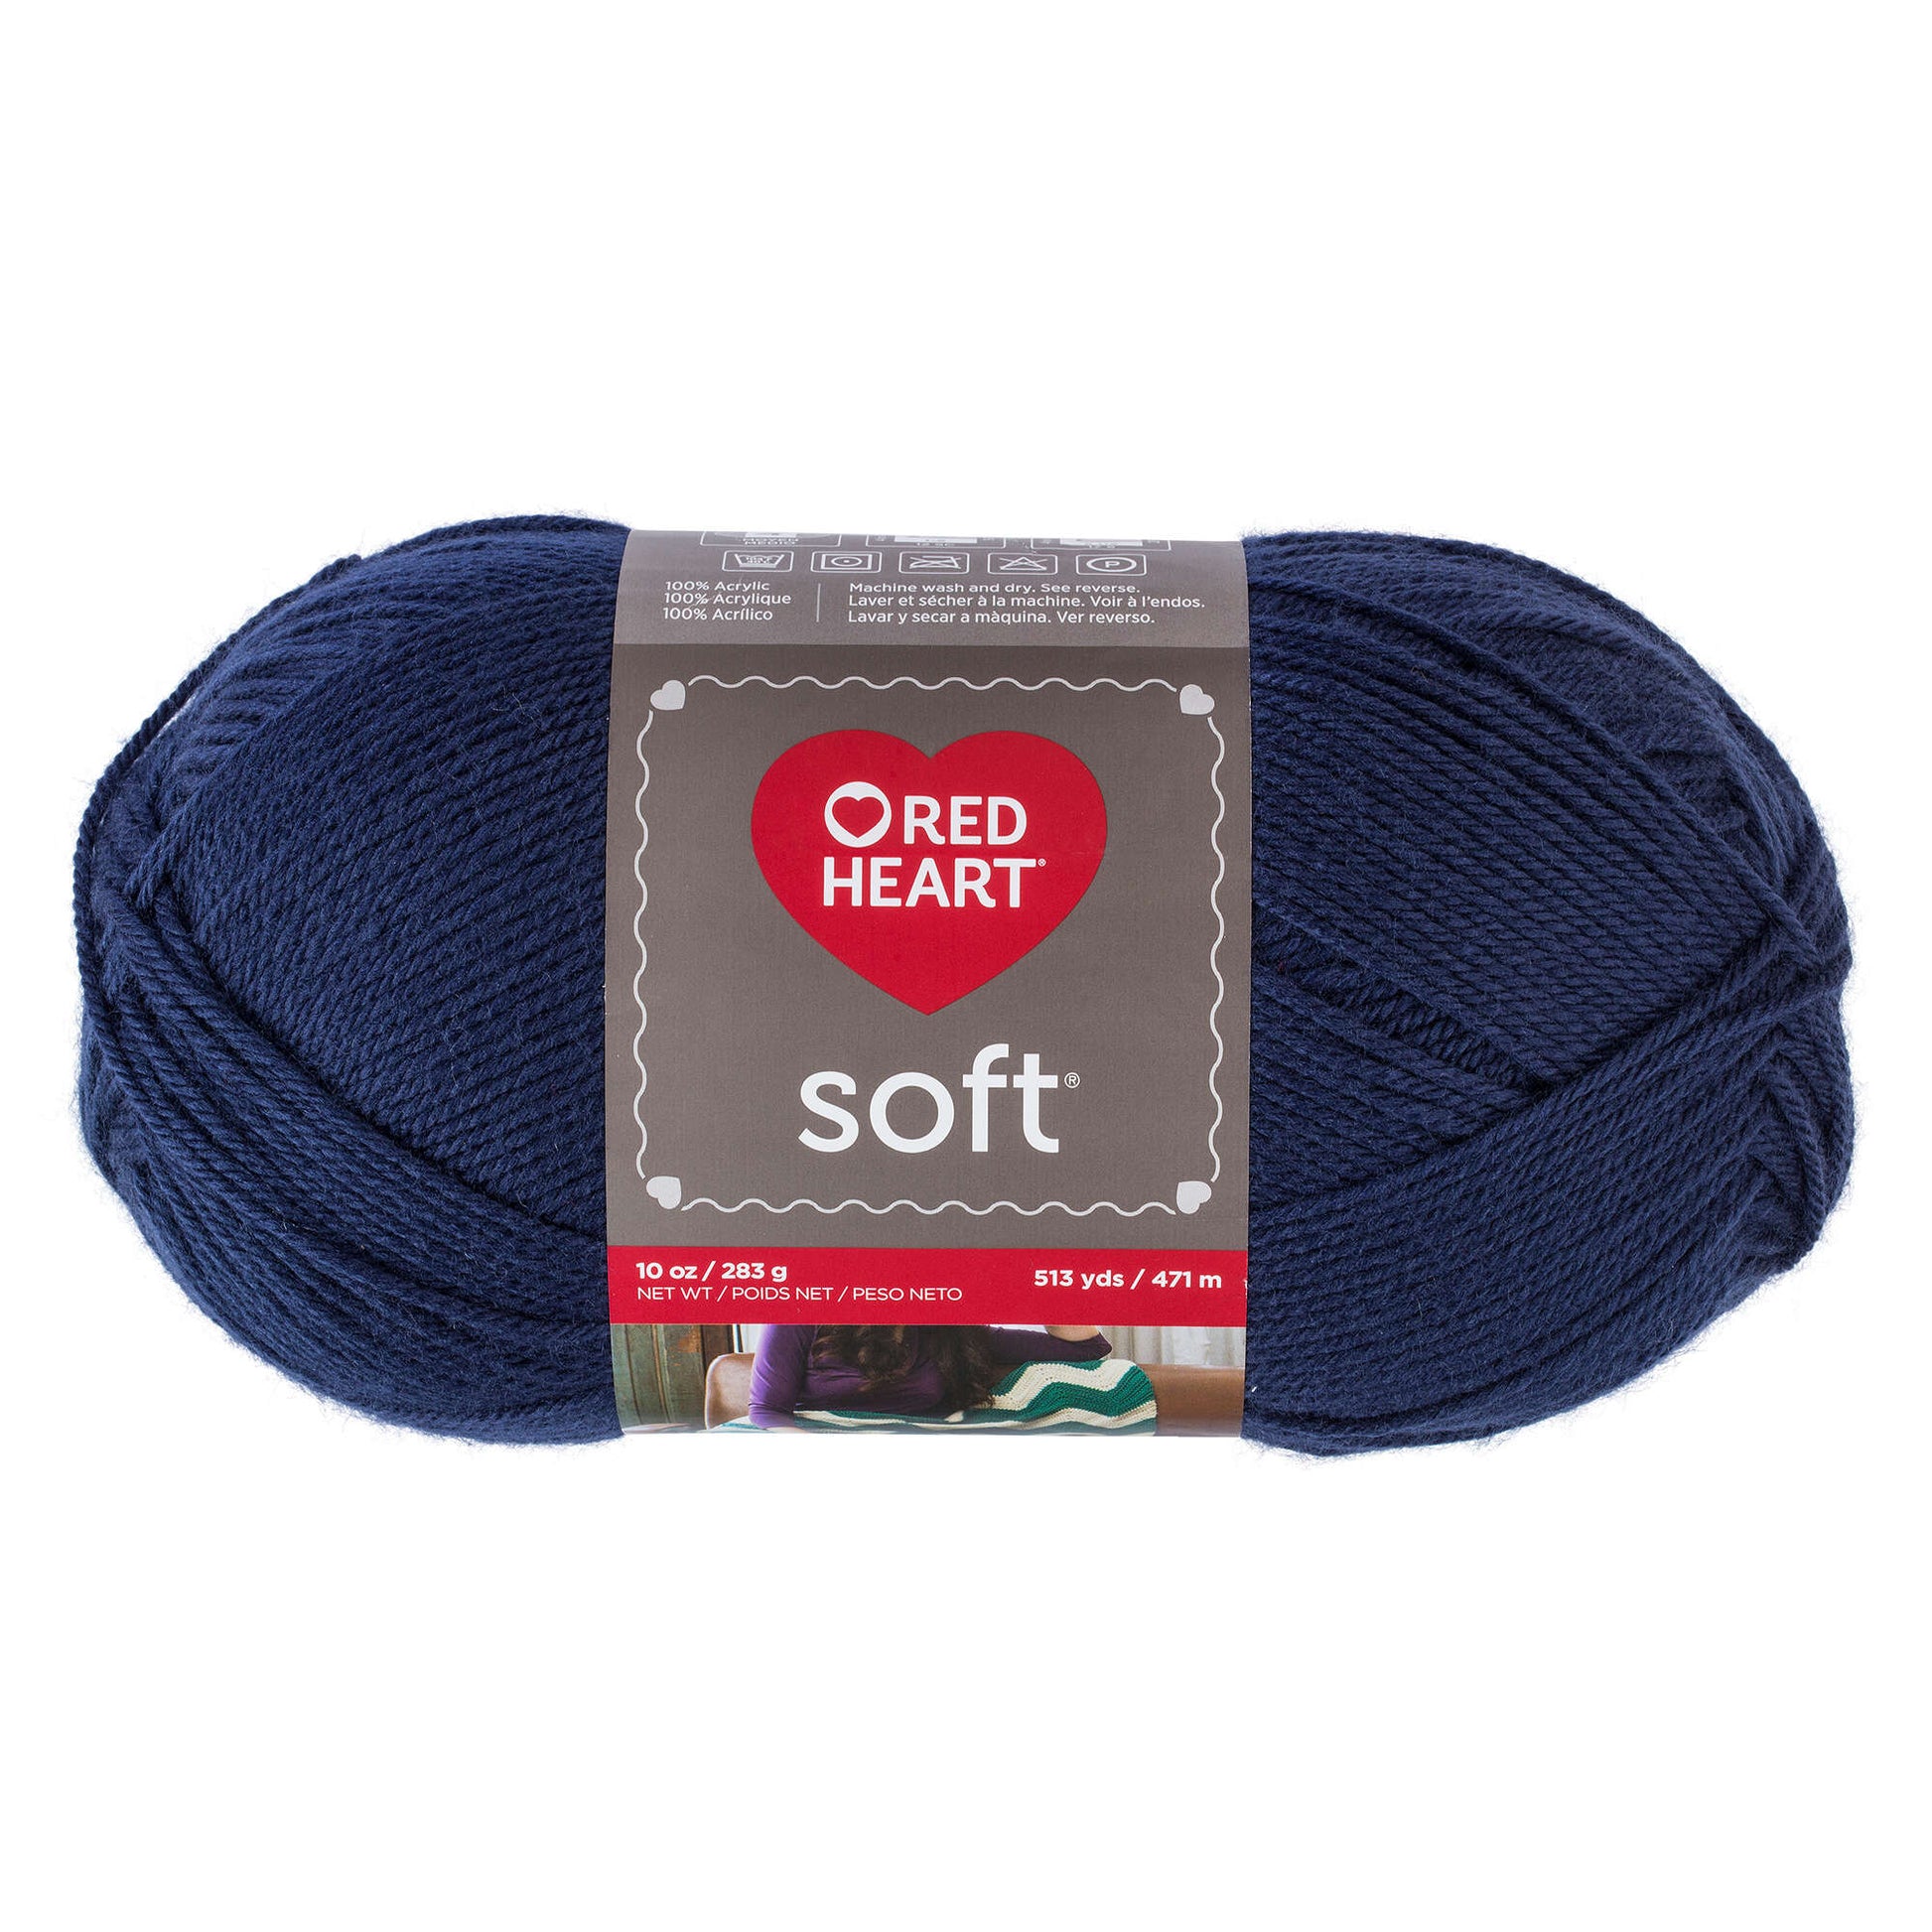 Red Heart Soft Yarn (283g/10oz) - Clearance shades